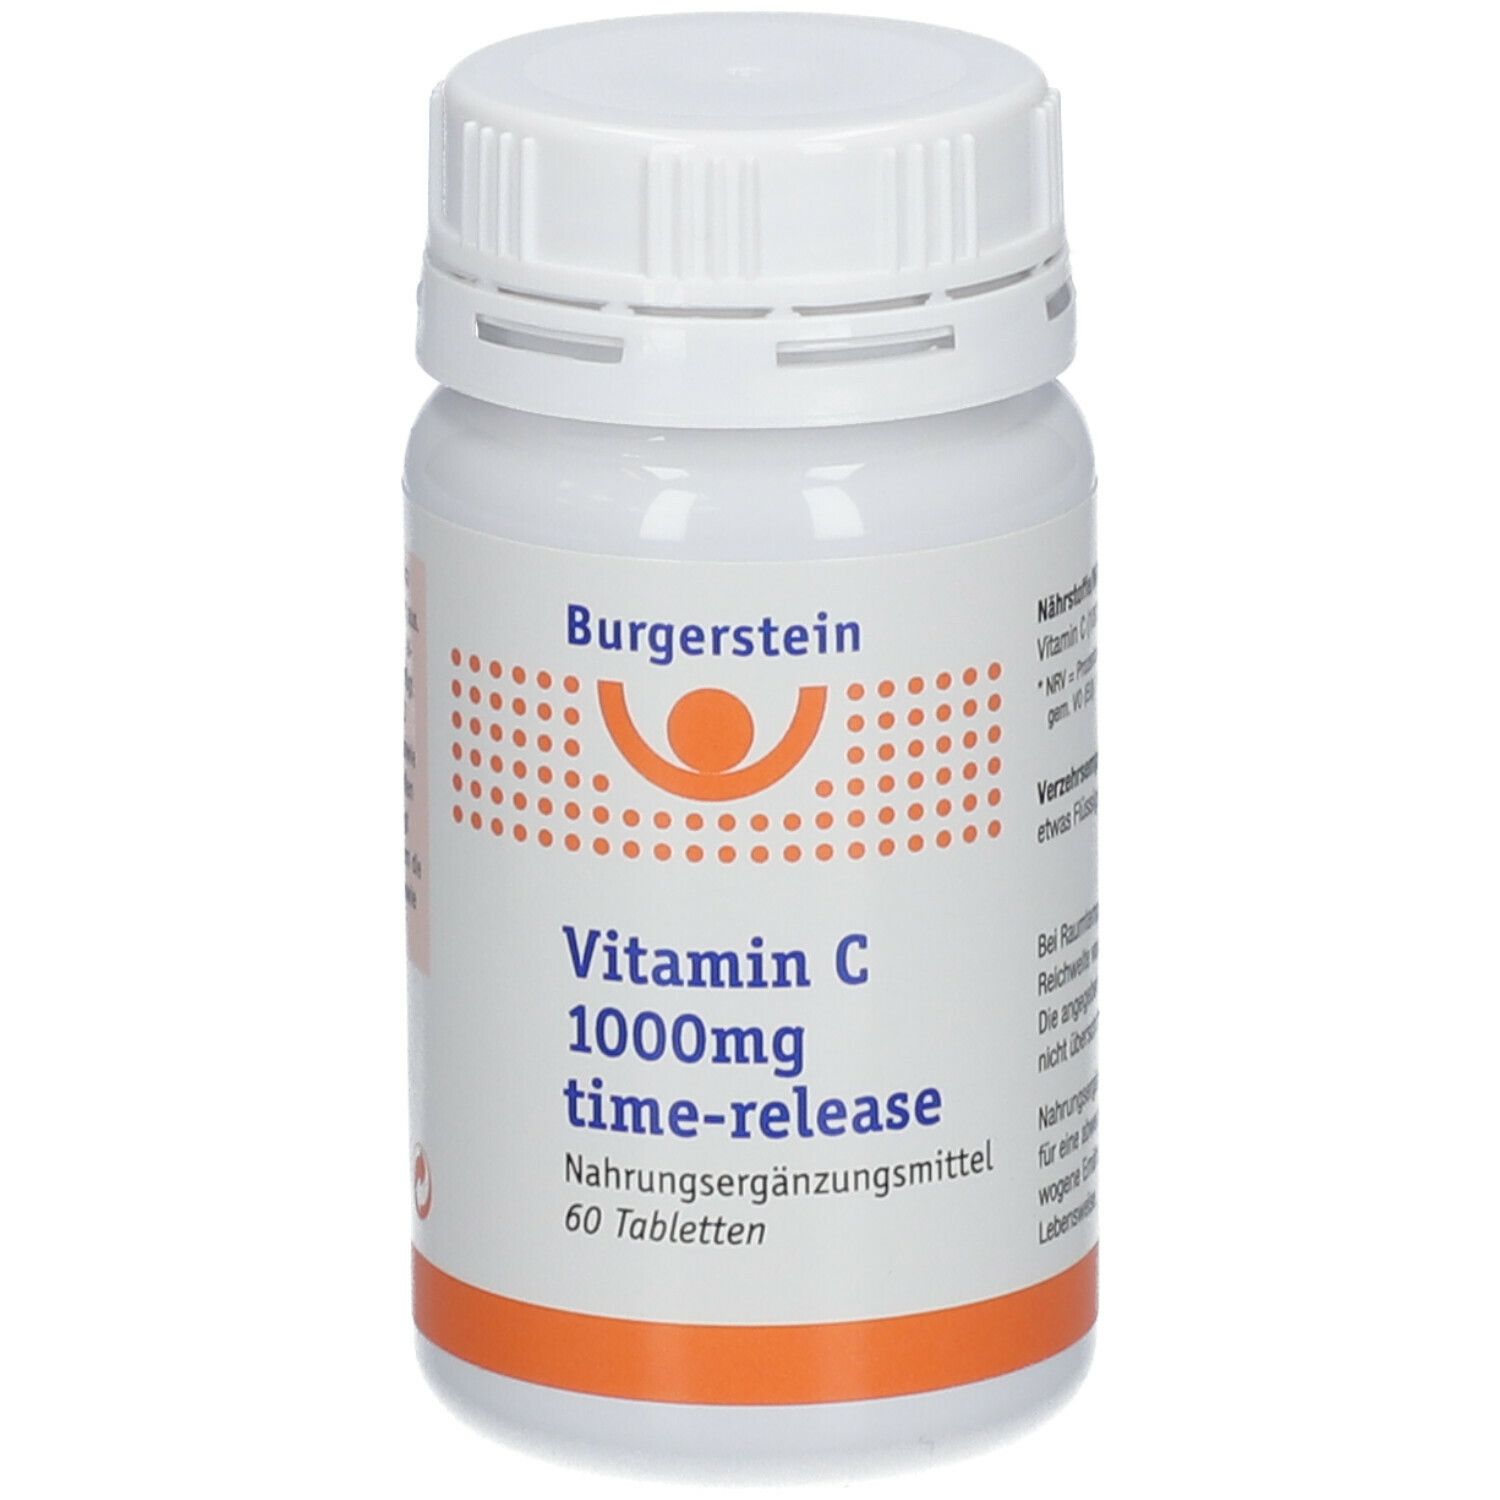 Burgerstein Vitamin C 1000 mg time-release